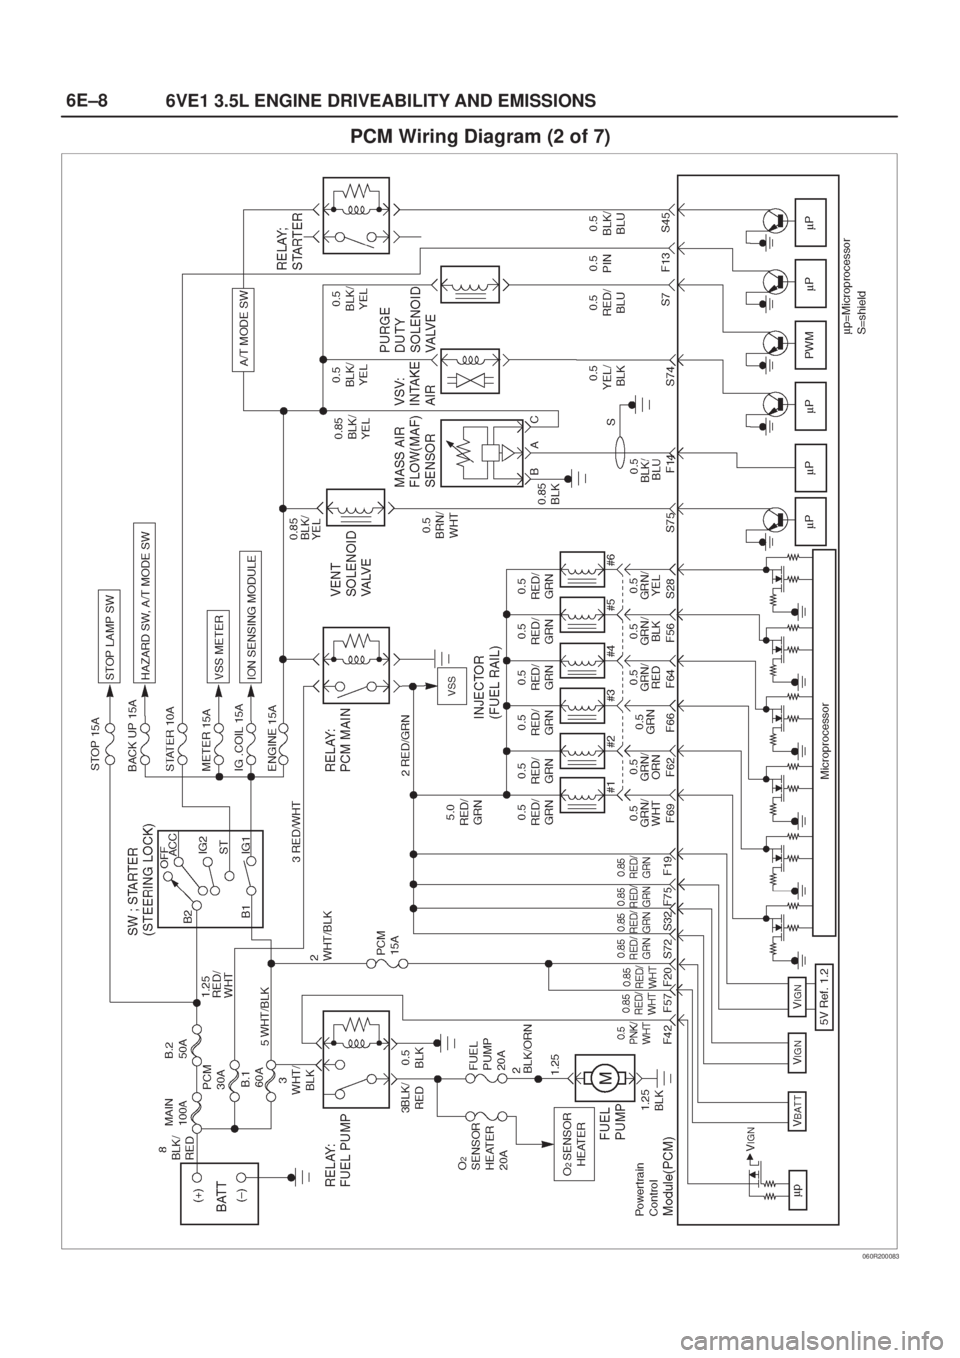 ISUZU AXIOM 2002  Service Repair Manual 6E±8
6VE1 3.5L ENGINE DRIVEABILITY AND EMISSIONS
PCM Wiring Diagram (2 of 7)
060R200083 